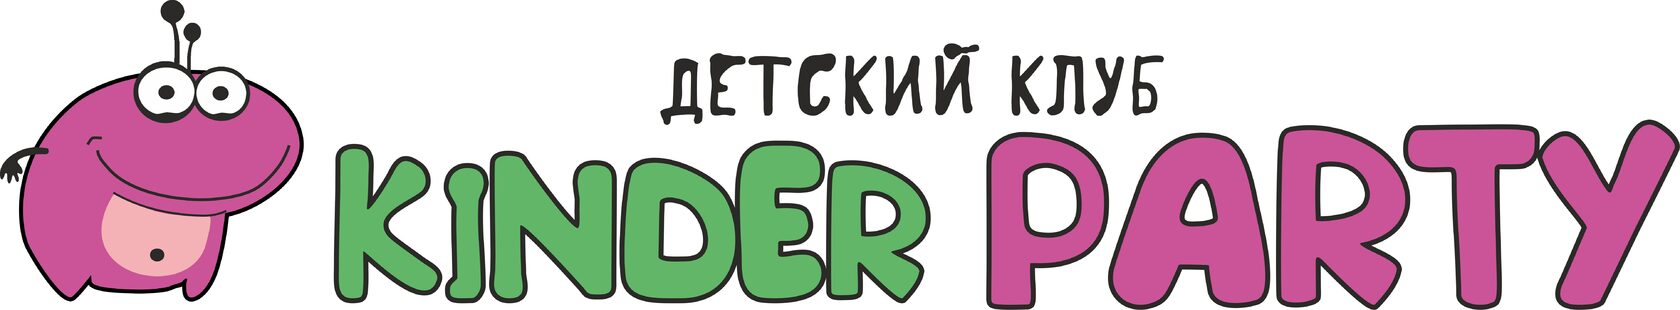 логотип киндерпати